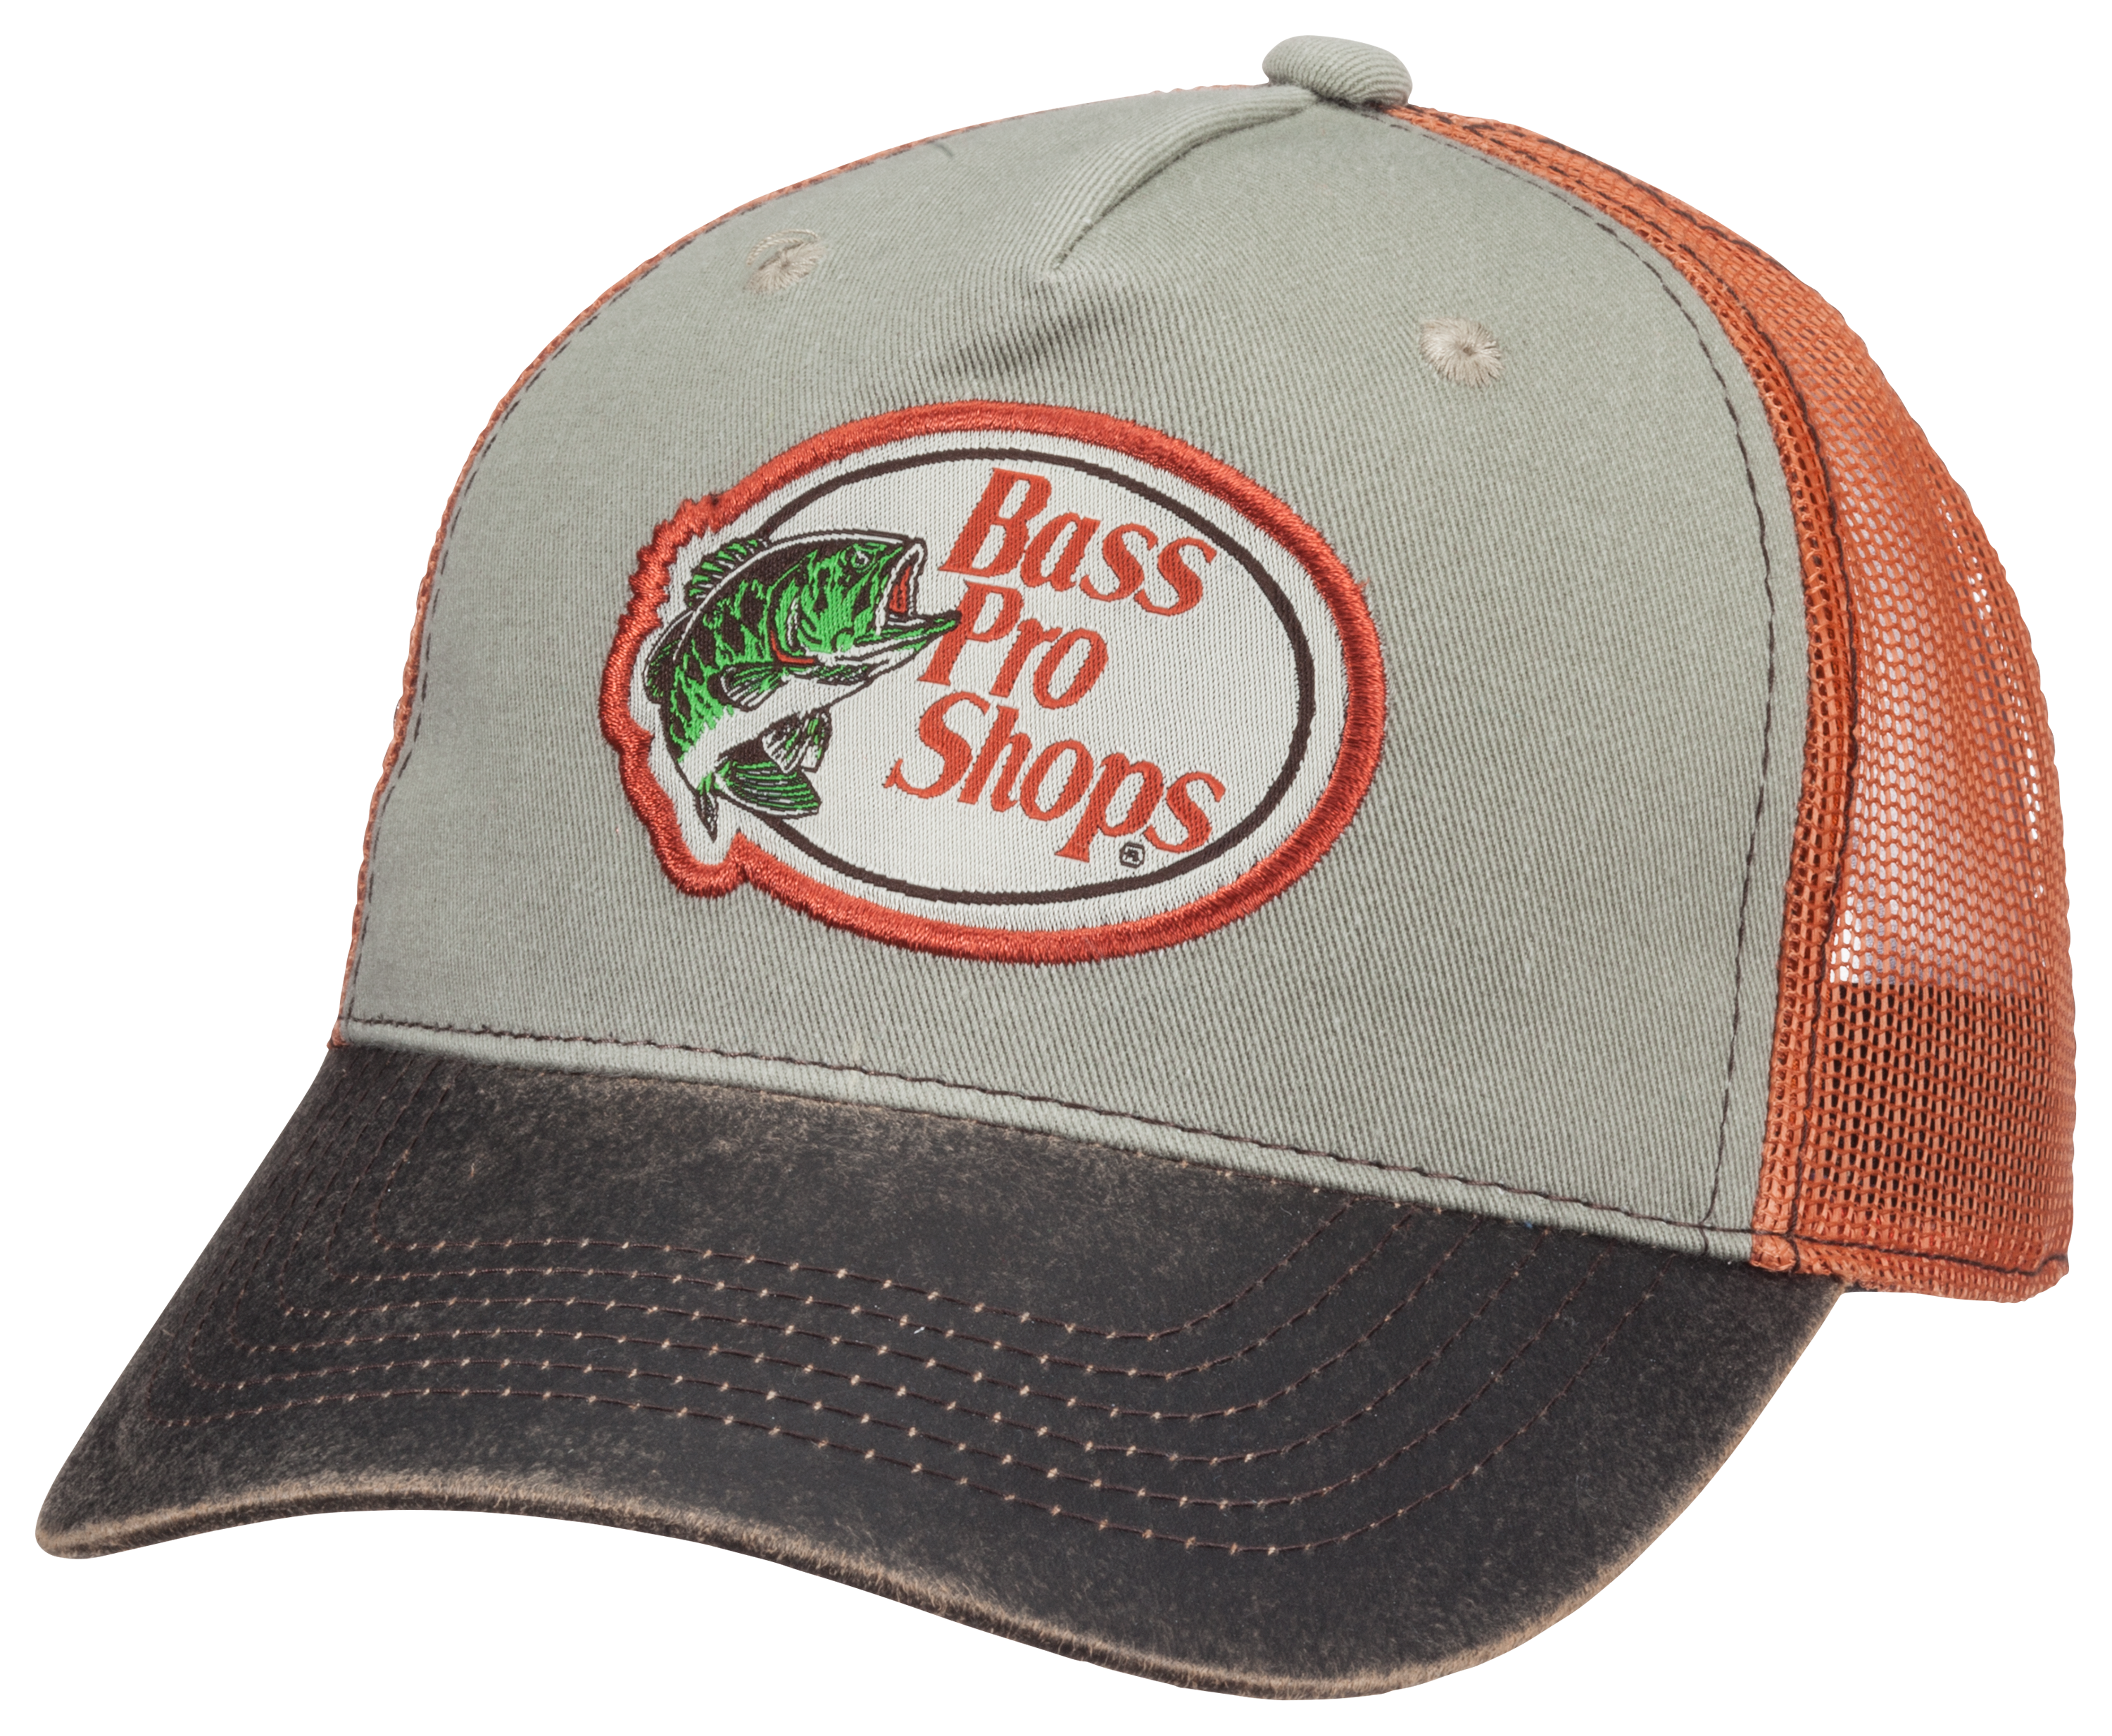 Got hats? We do… In every color 🧢 . . . #bassproshops #basspro #bass